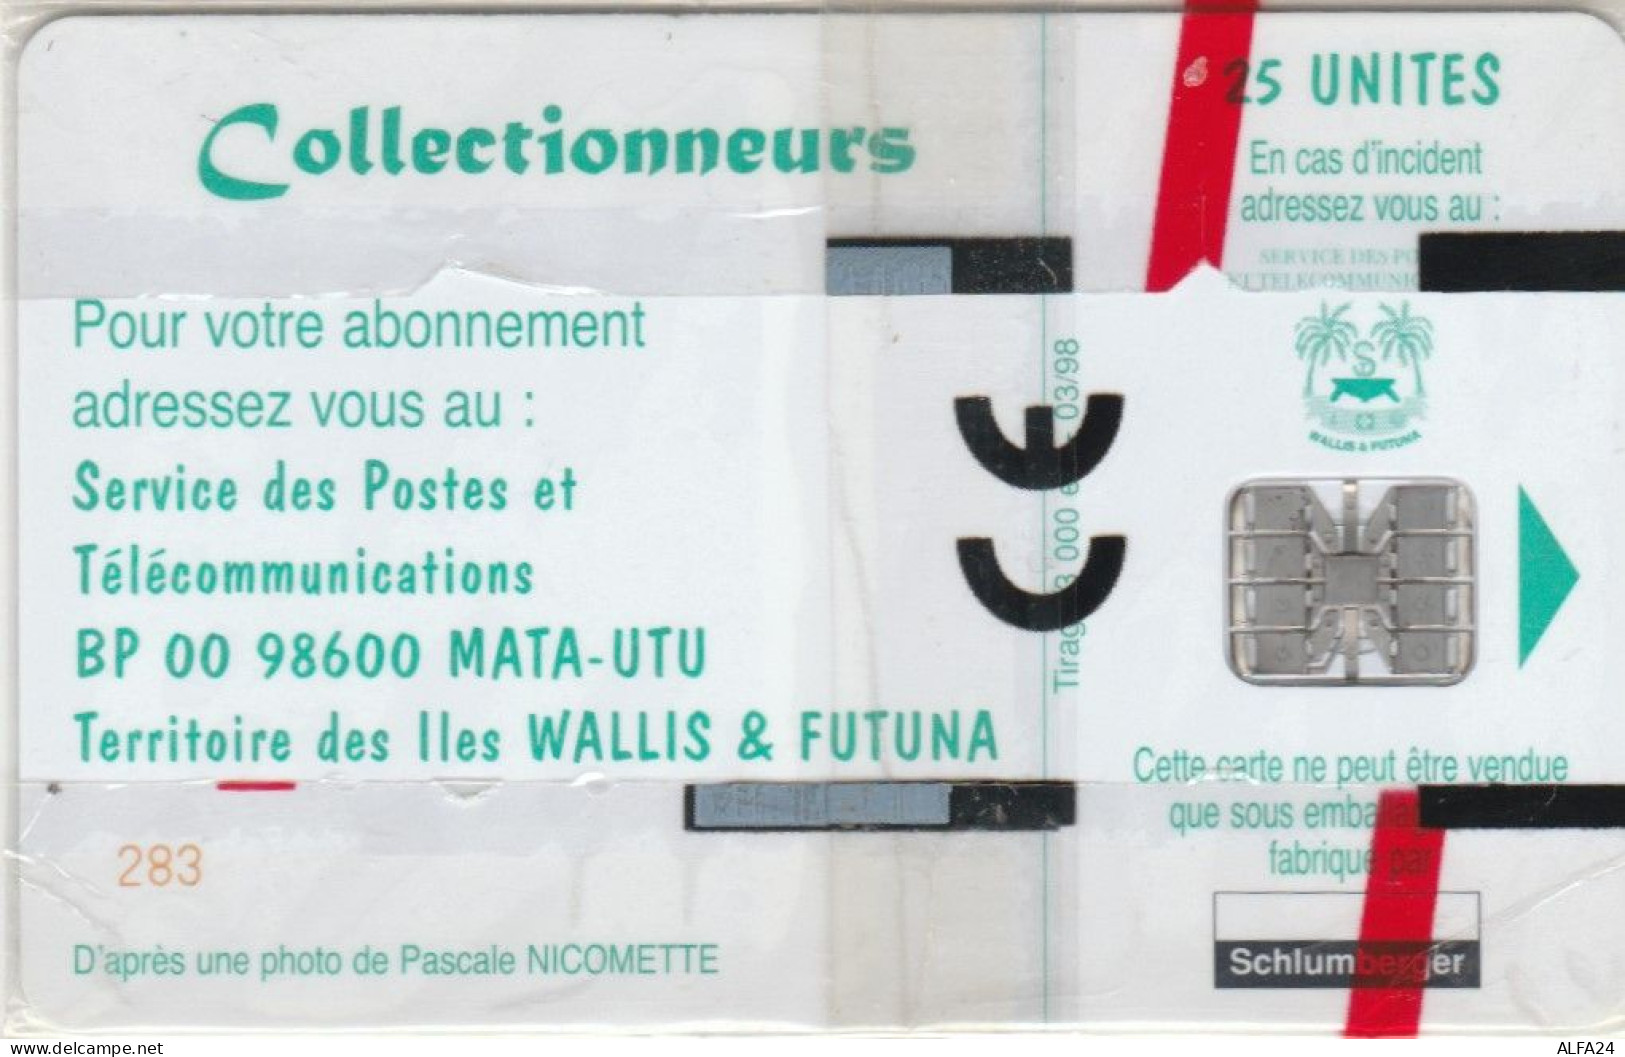 PHONE CARD WALLIS E FUTUNA -NEW BLISTER (E103.39.6 - Wallis-et-Futuna